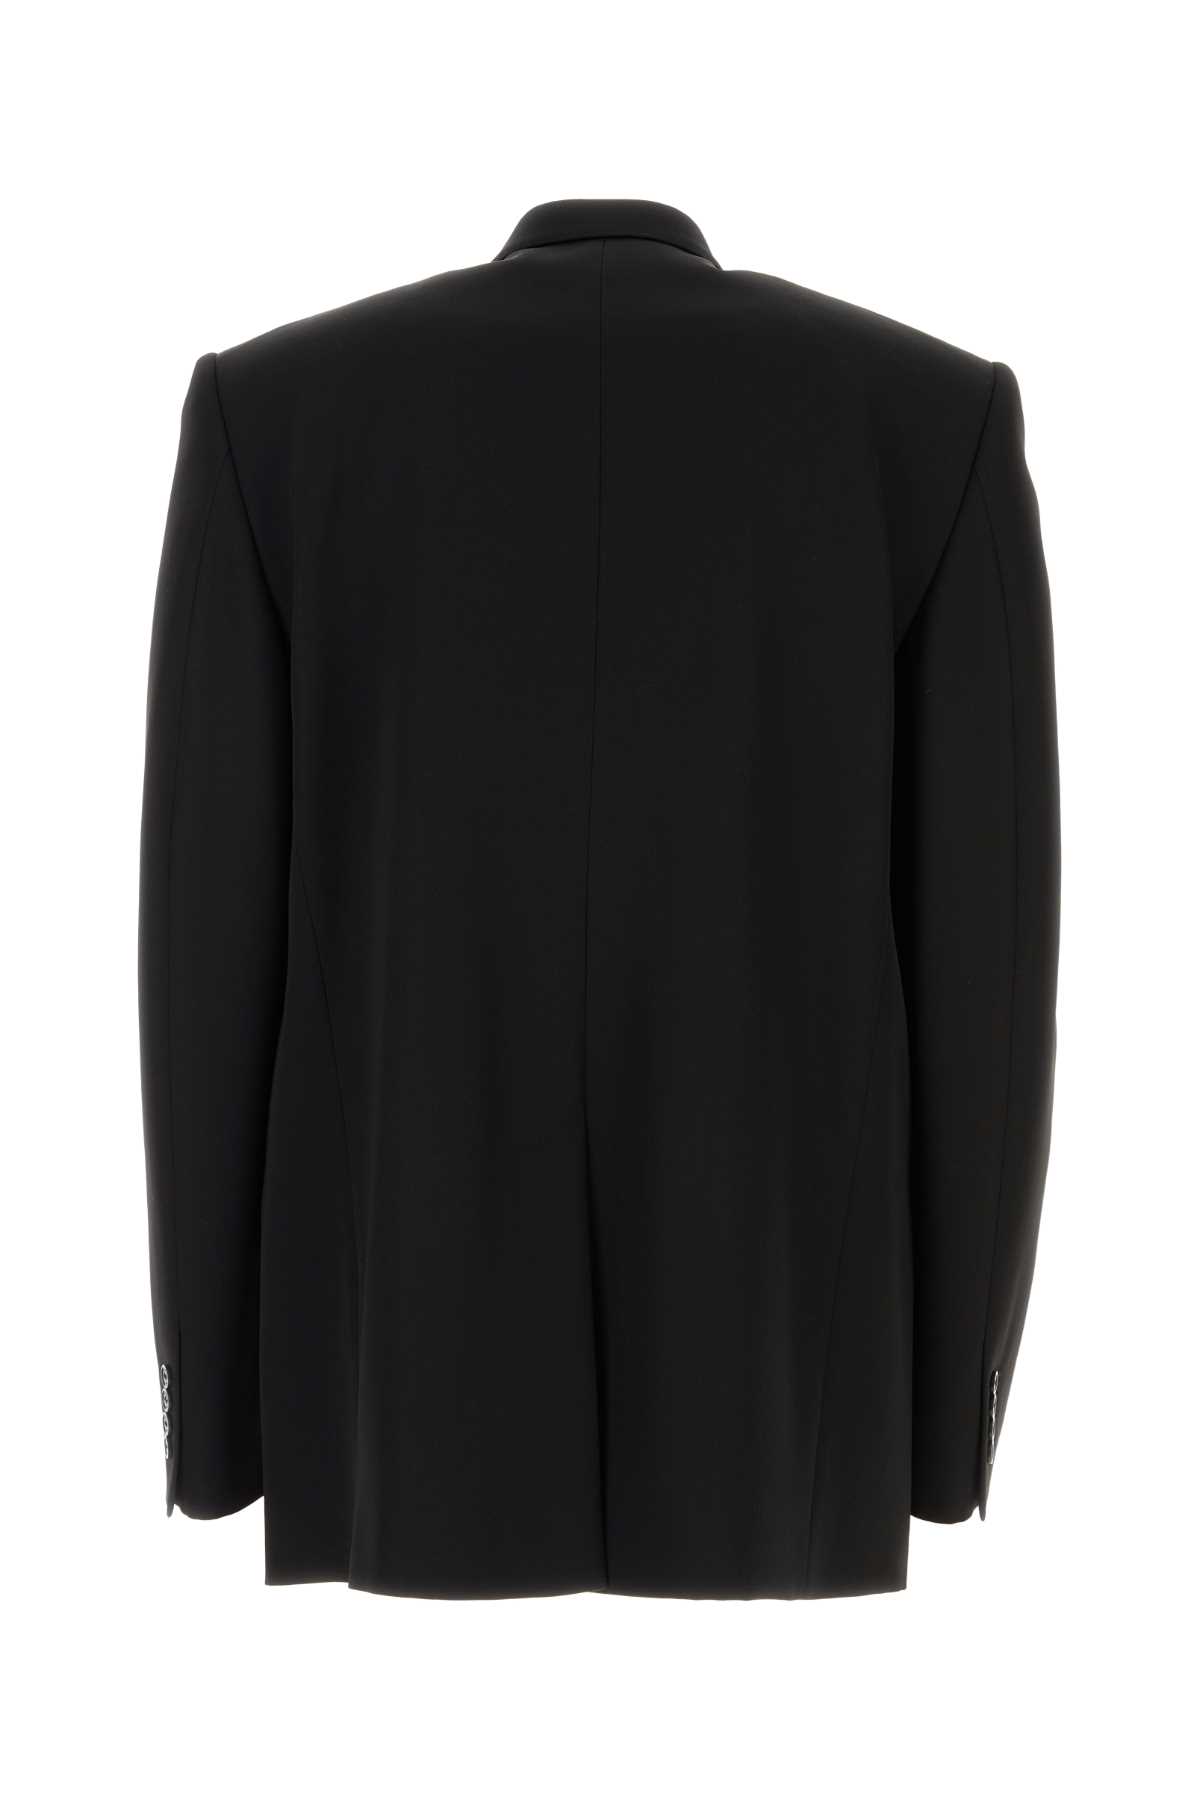 Balenciaga Black Wool Oversize Blazer